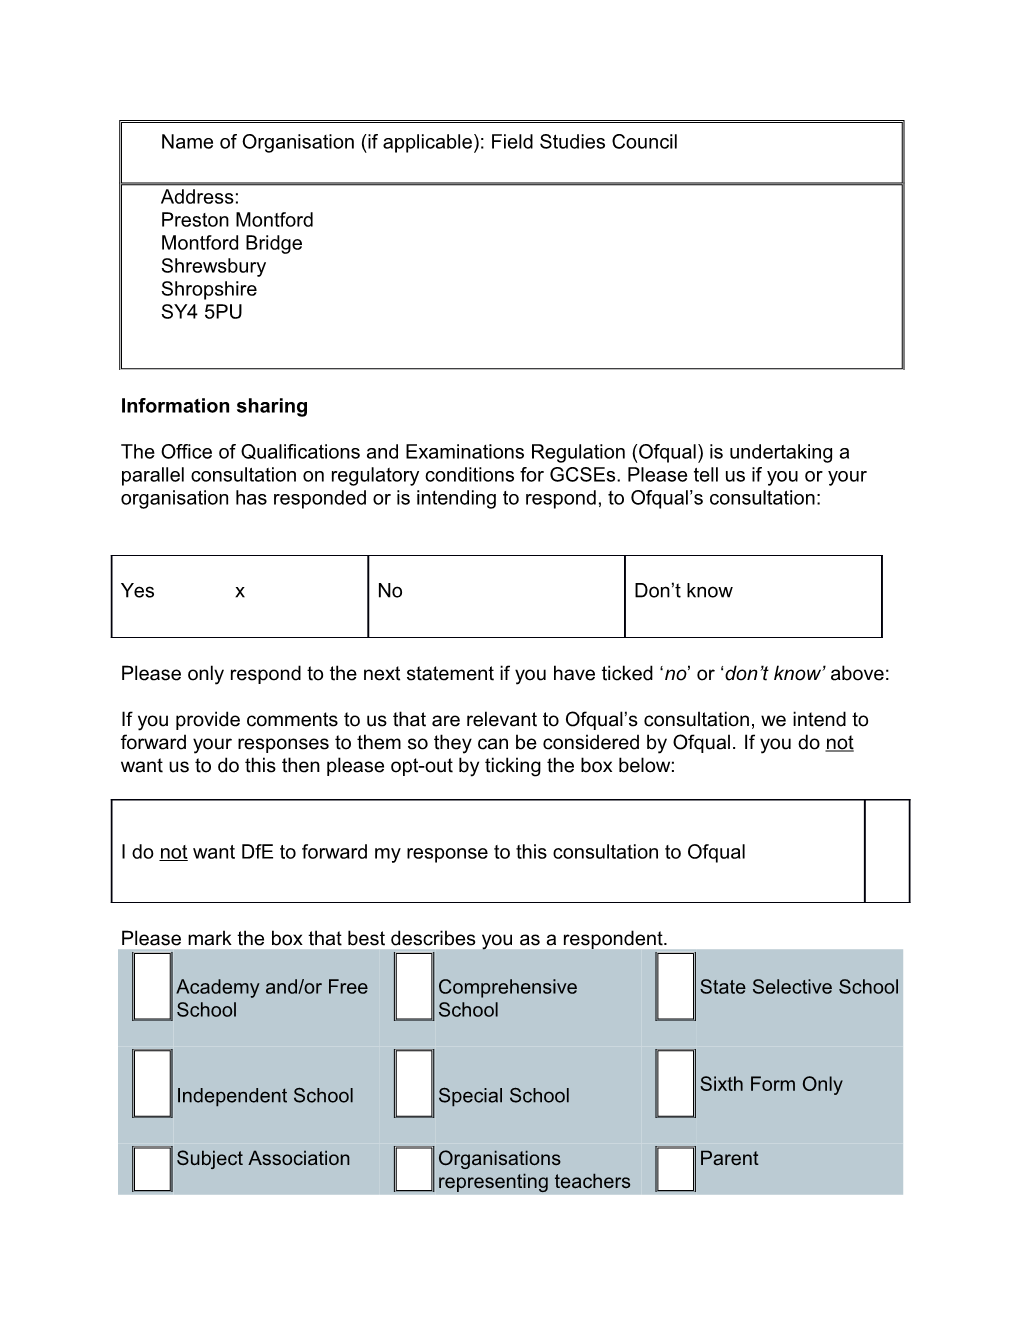 Reformed GCSE Subject Content Consultation